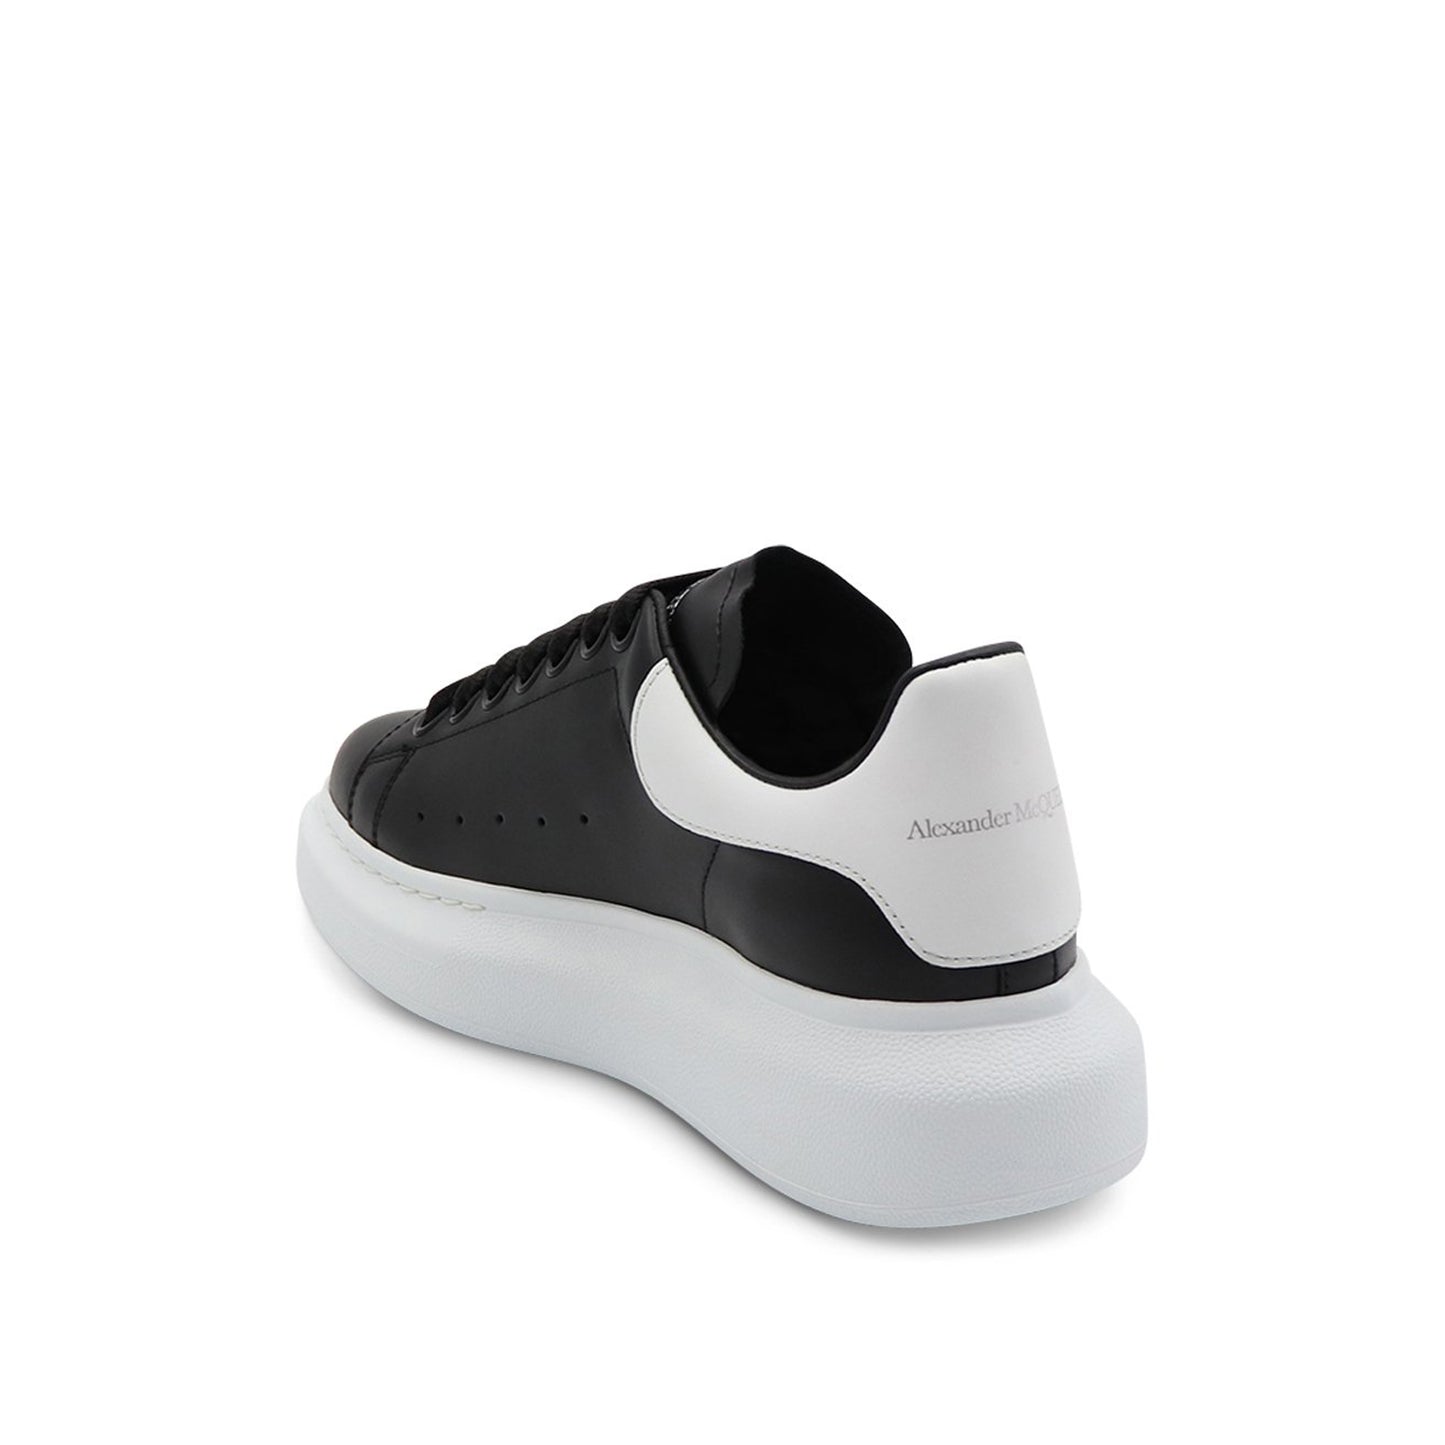 Larry Oversized Sneakers in Black/White